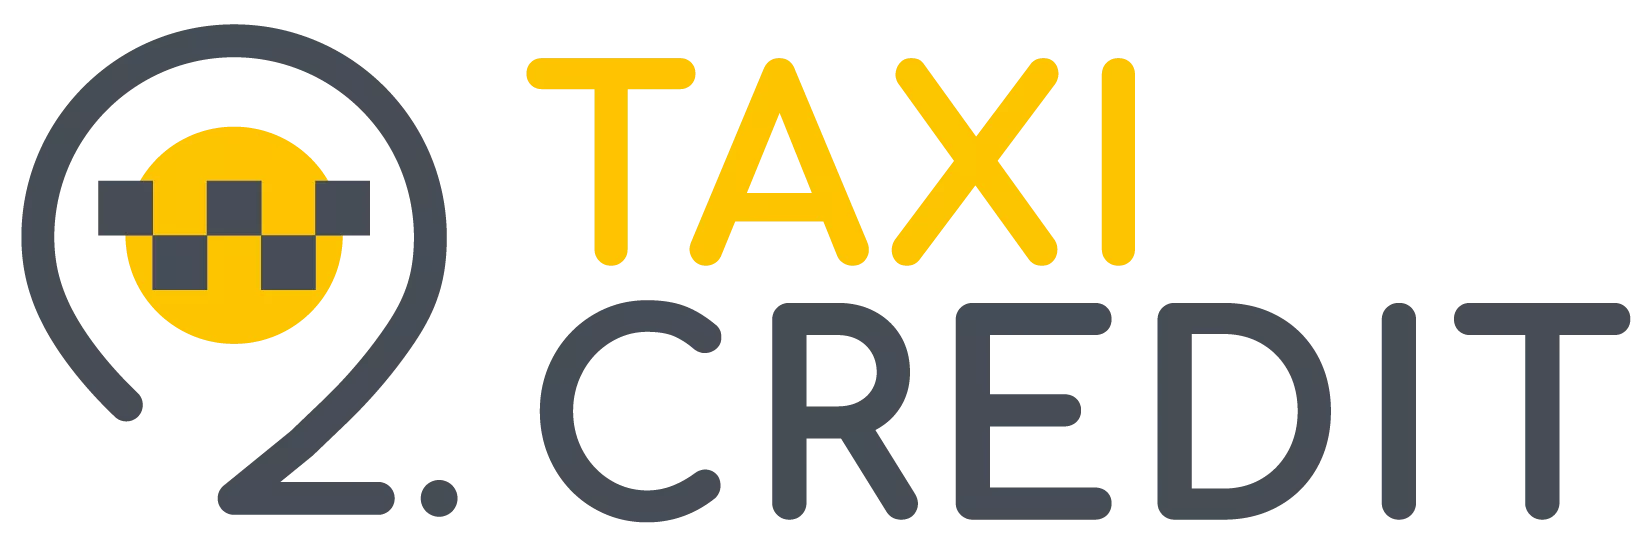 Такси в кредит. Ideal Taxi logo. Купить такси в кредит